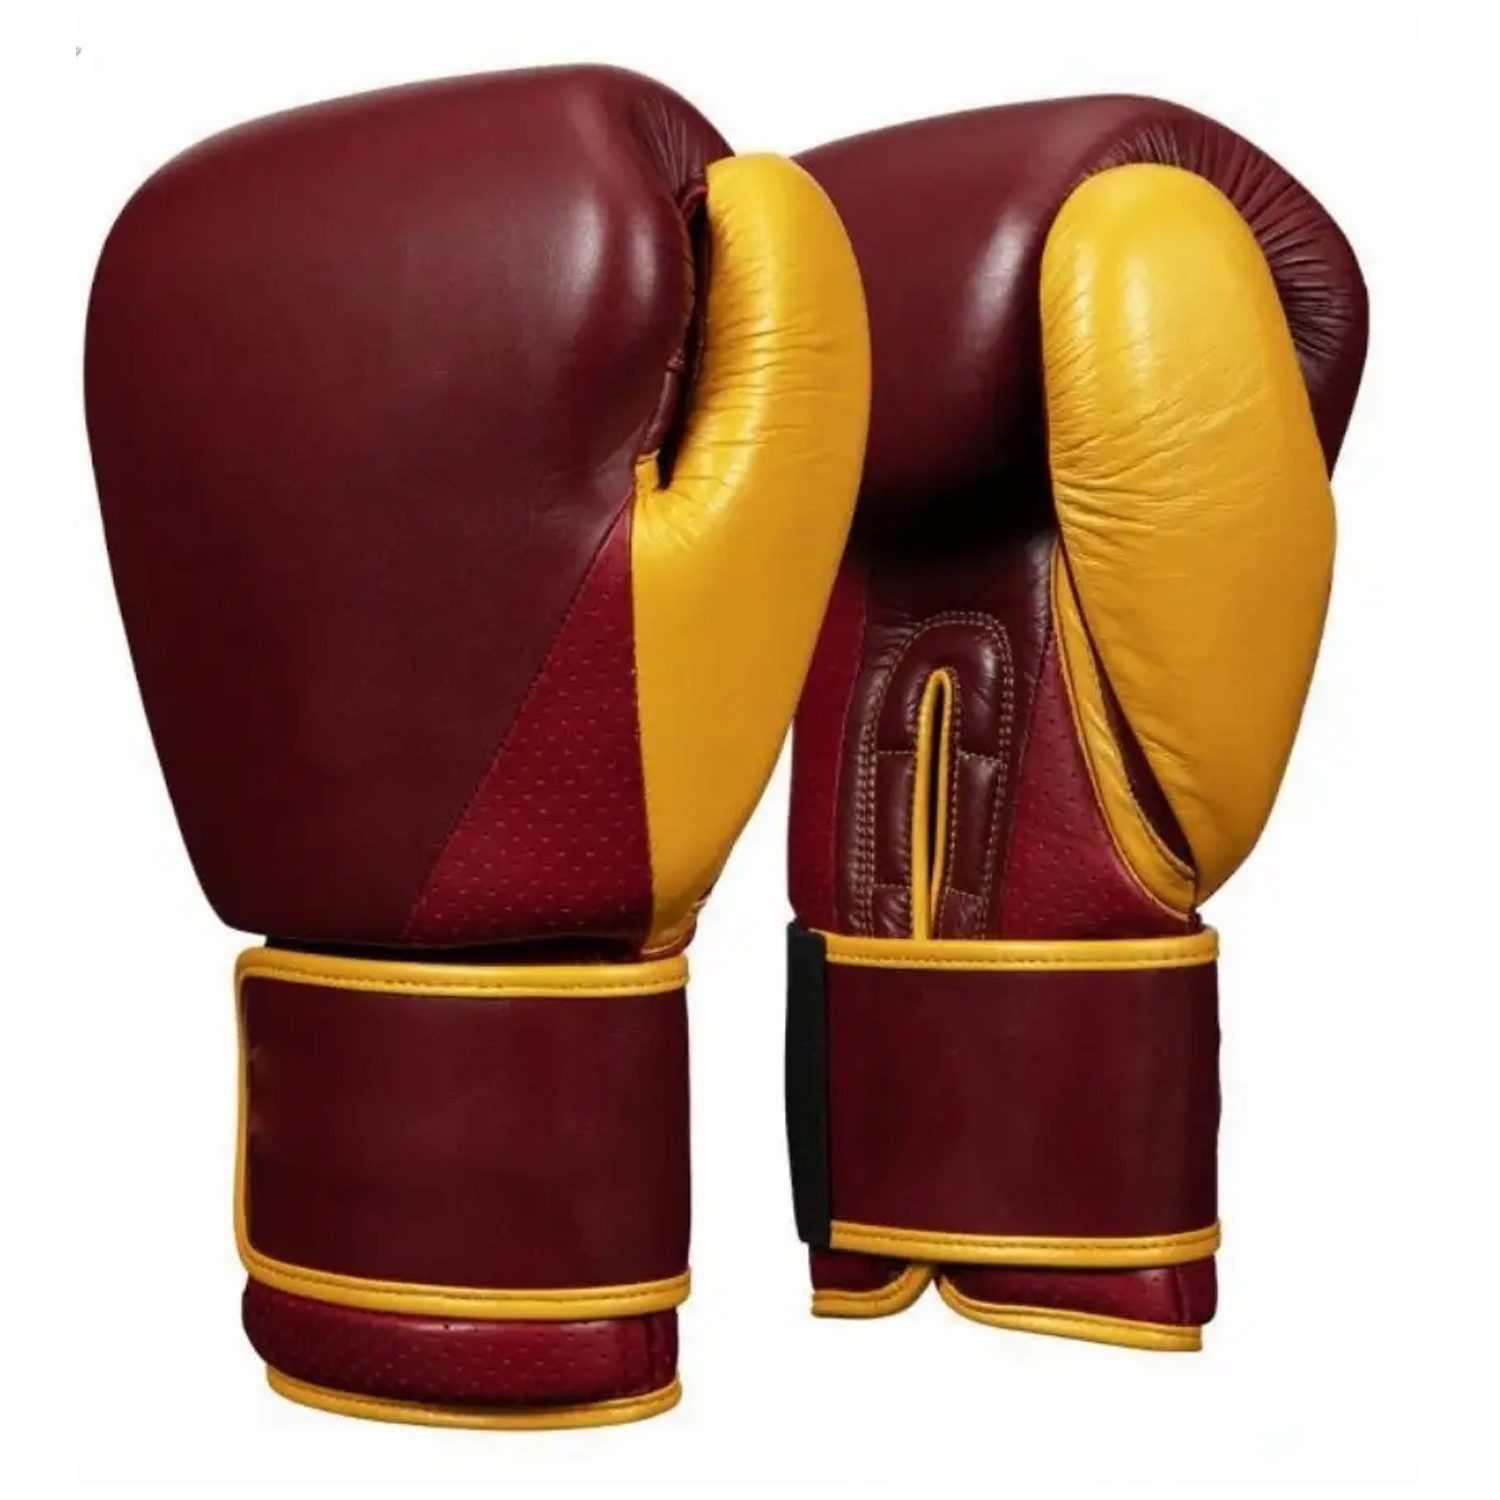 Kickboxing Fighting Gloves